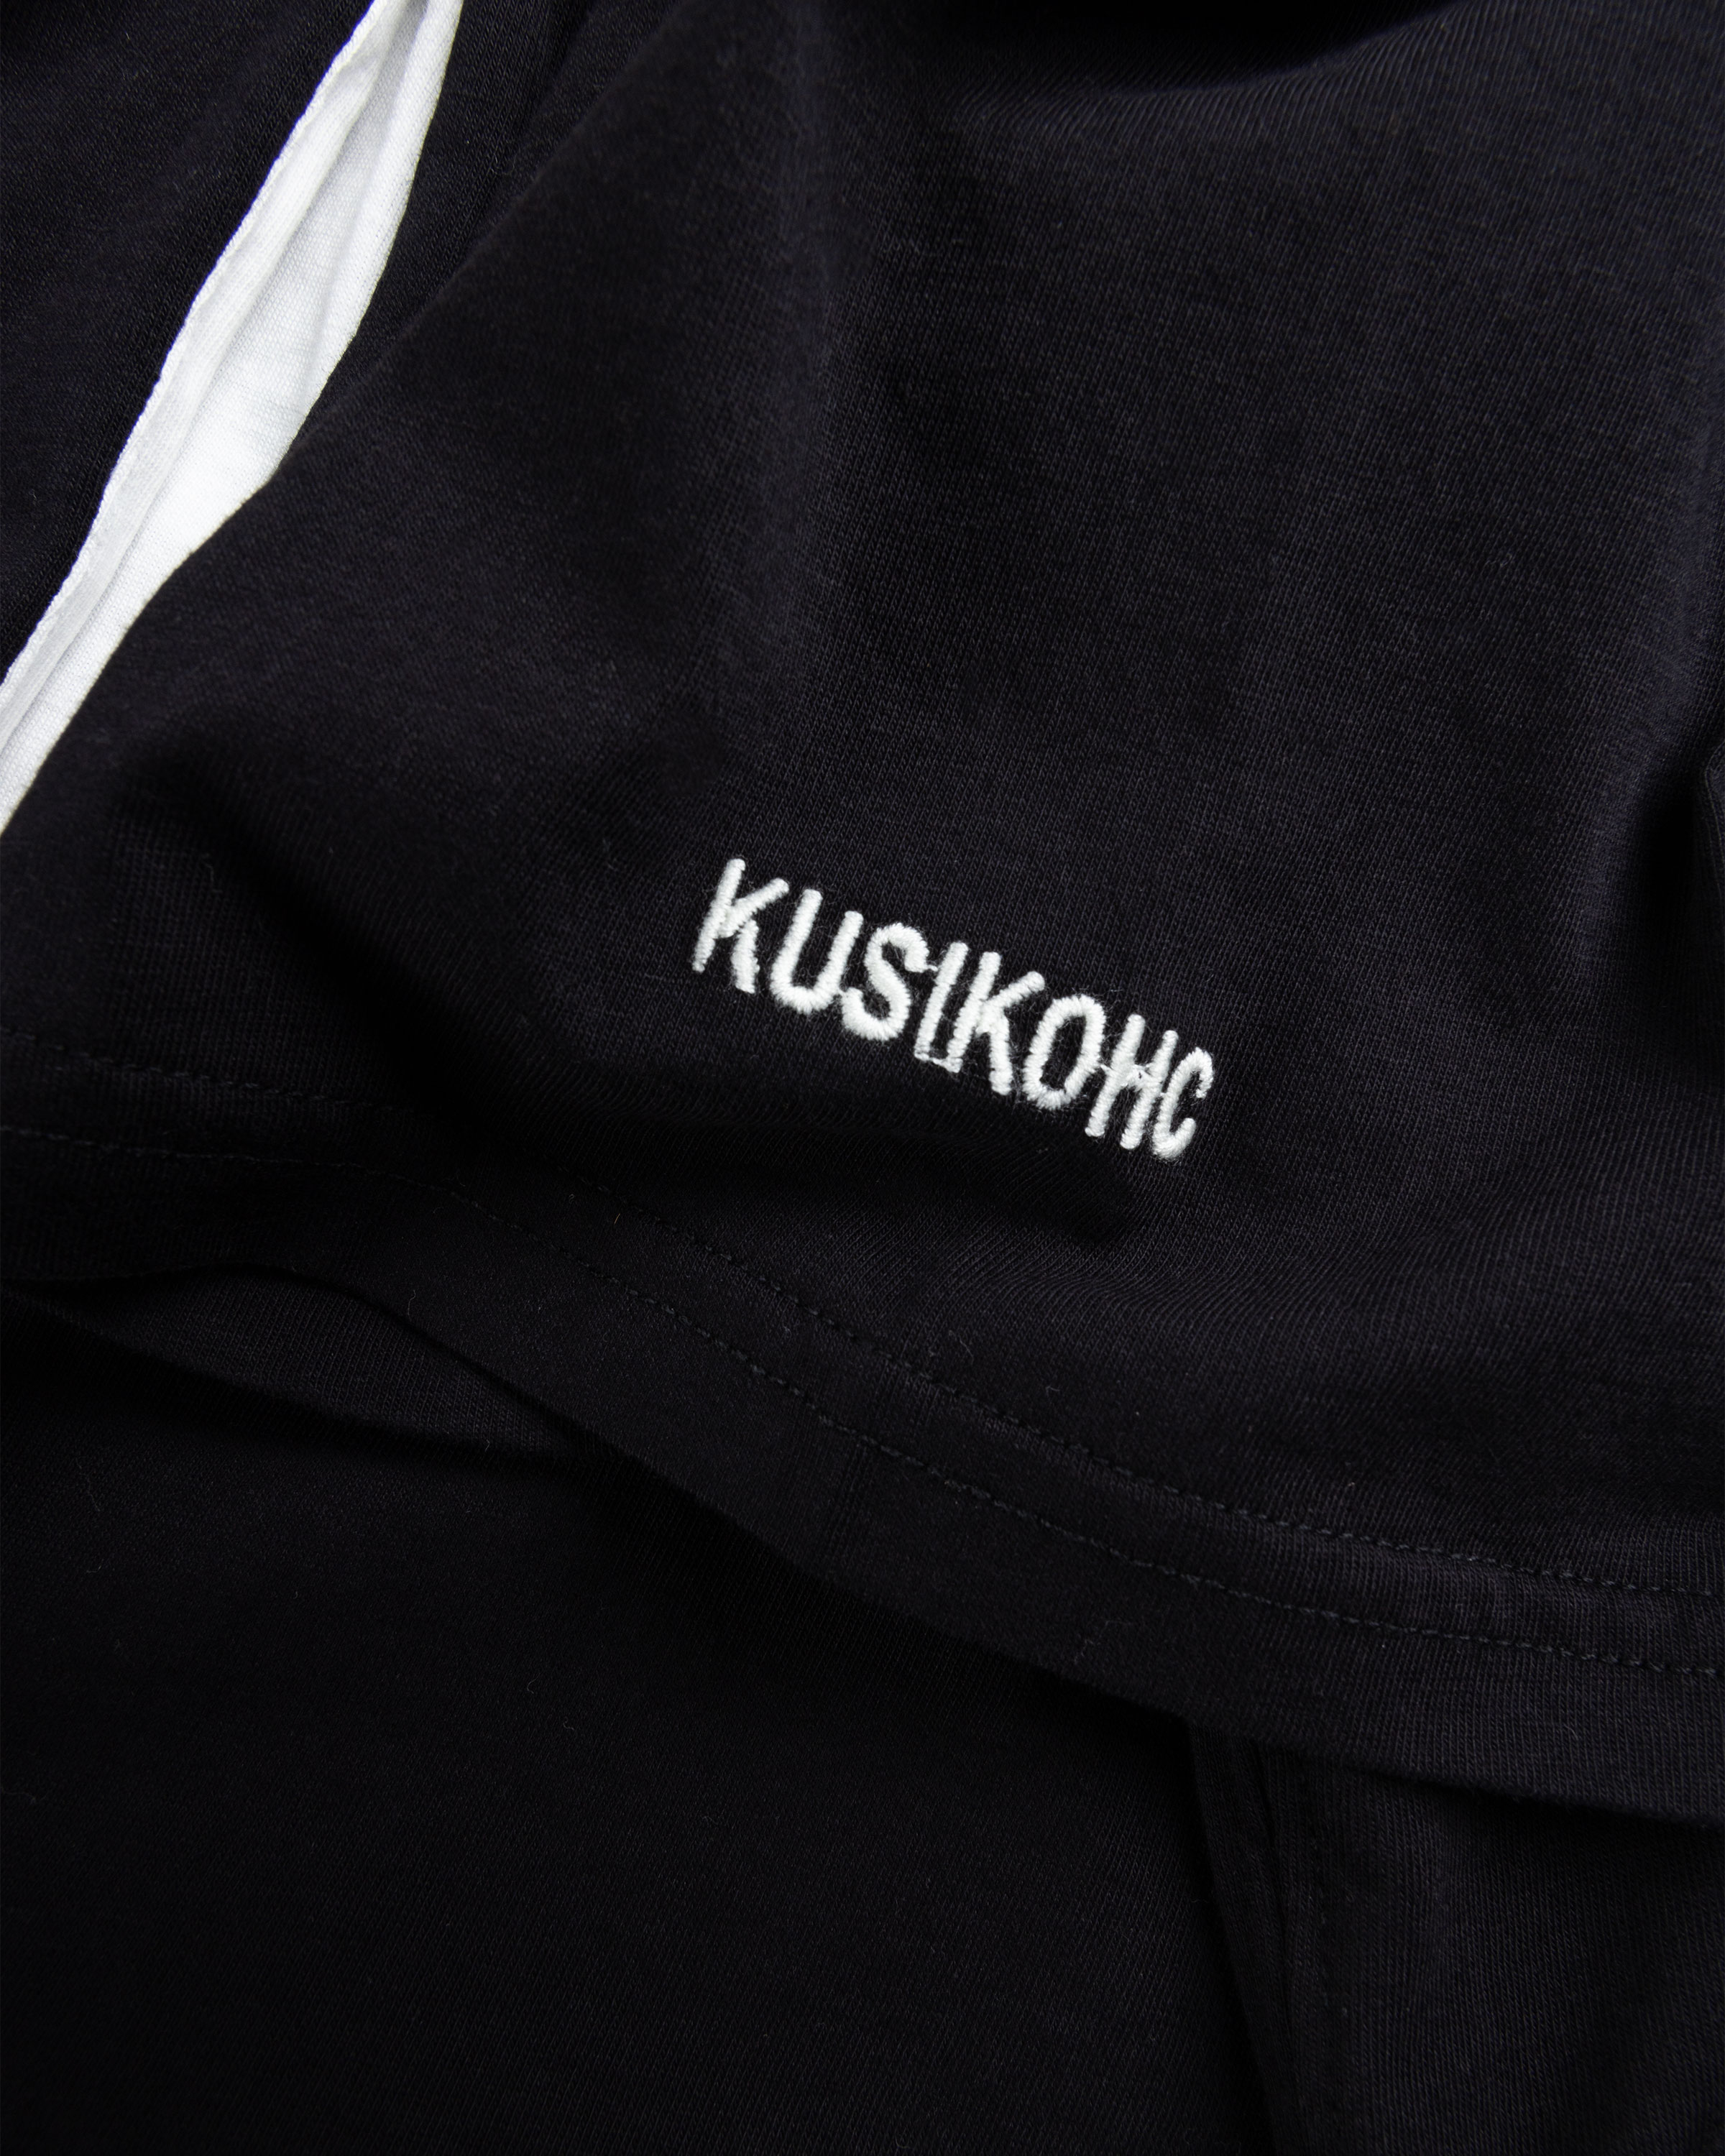 KUSIKOHC – Origami T-Shirt Black/White Alyssum - Tops - Black - Image 6